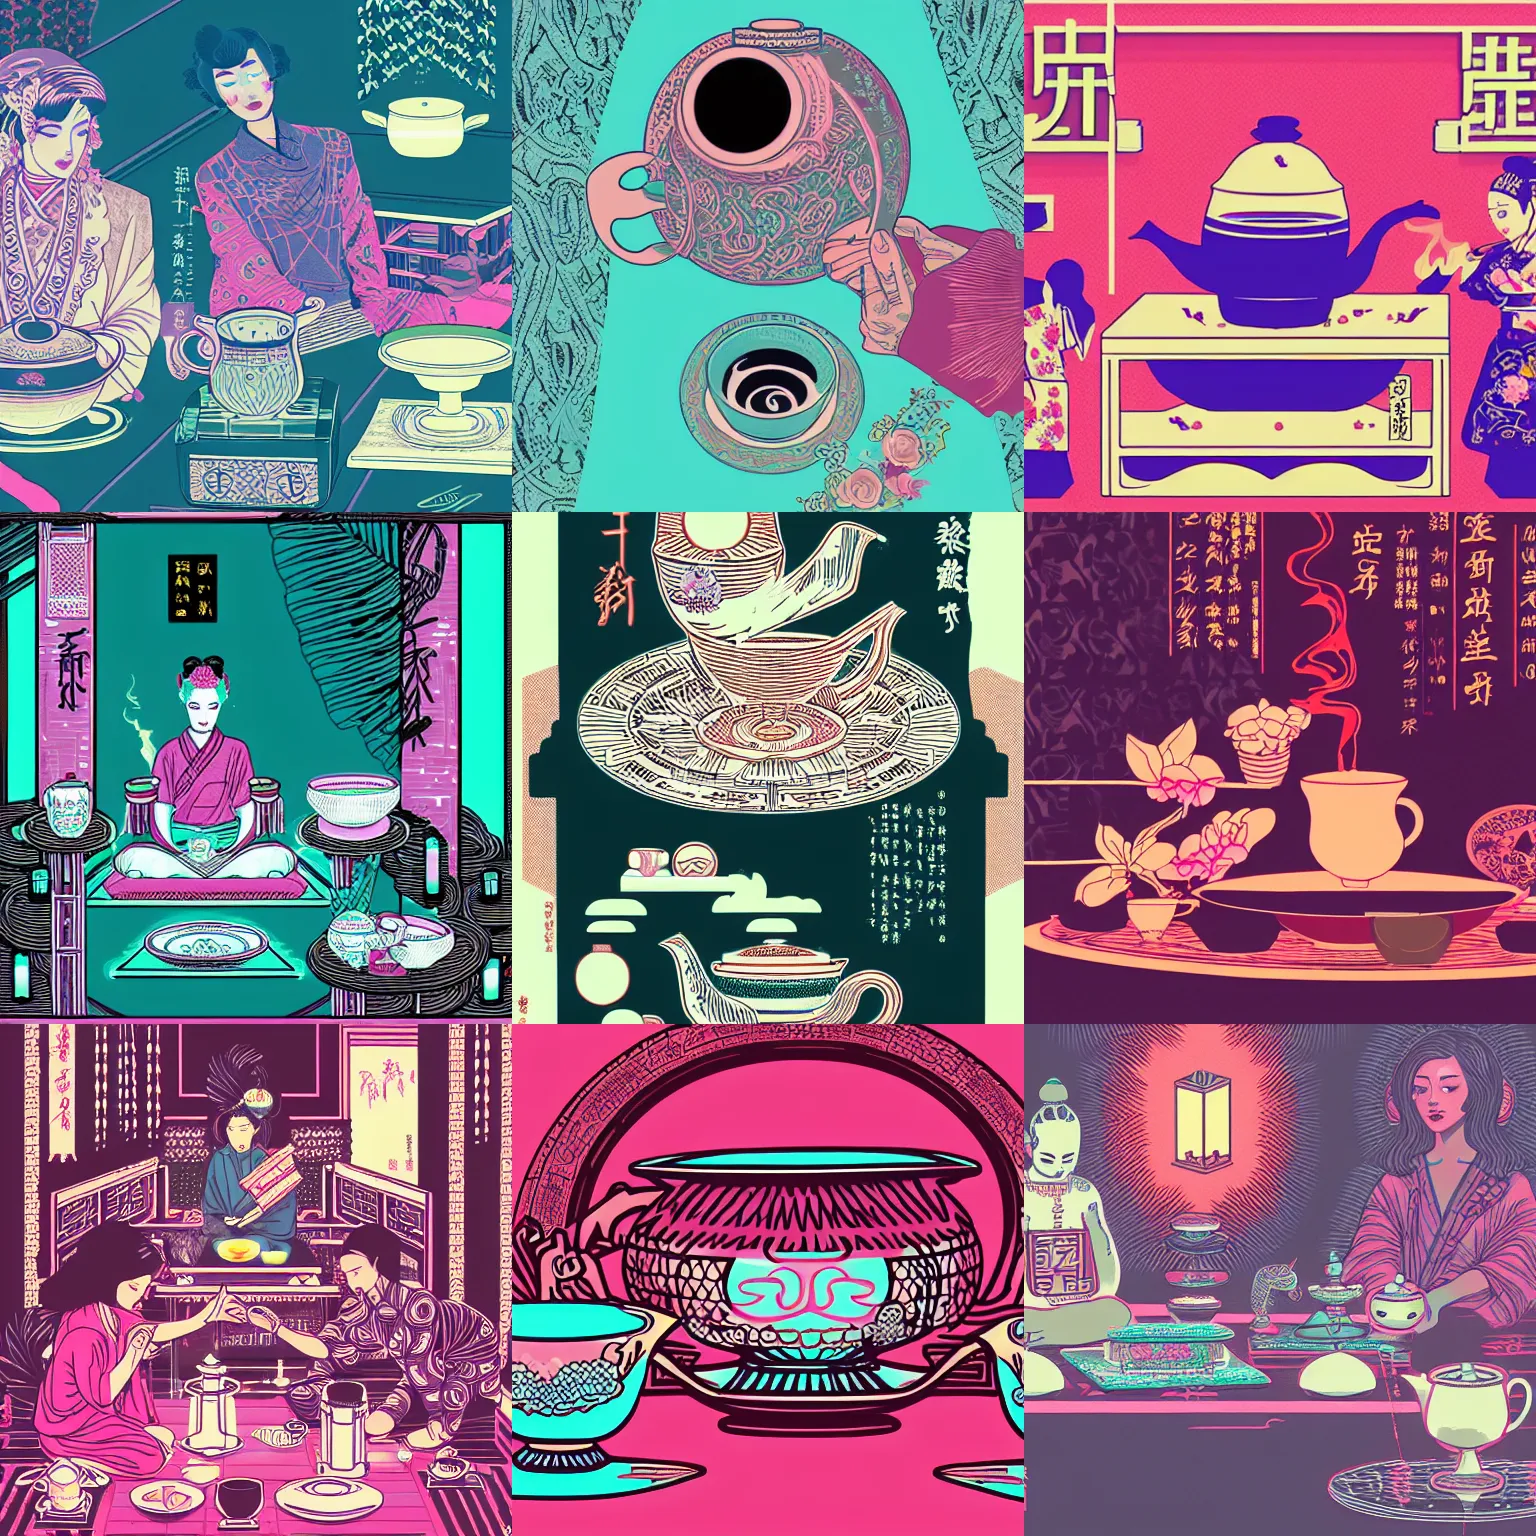 Prompt: vaporwave tea ceremony, intricate illustration by tim doyle